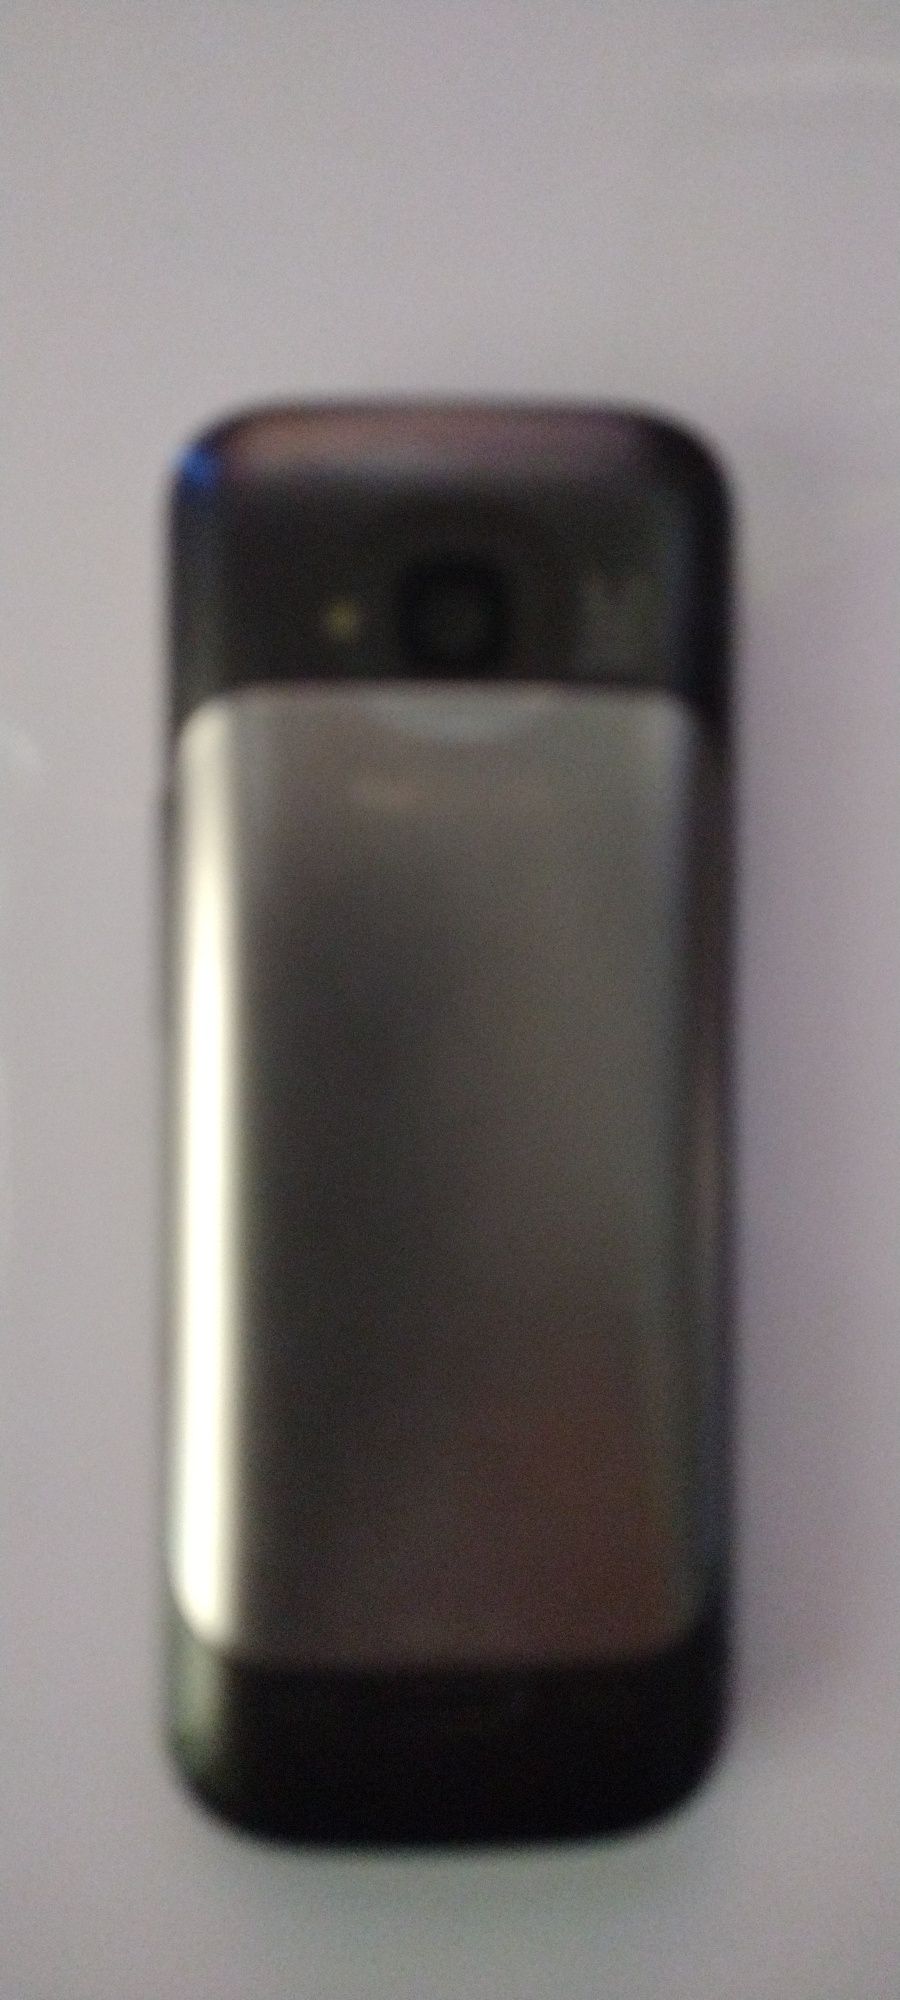 Telefon Nokia C 5-00